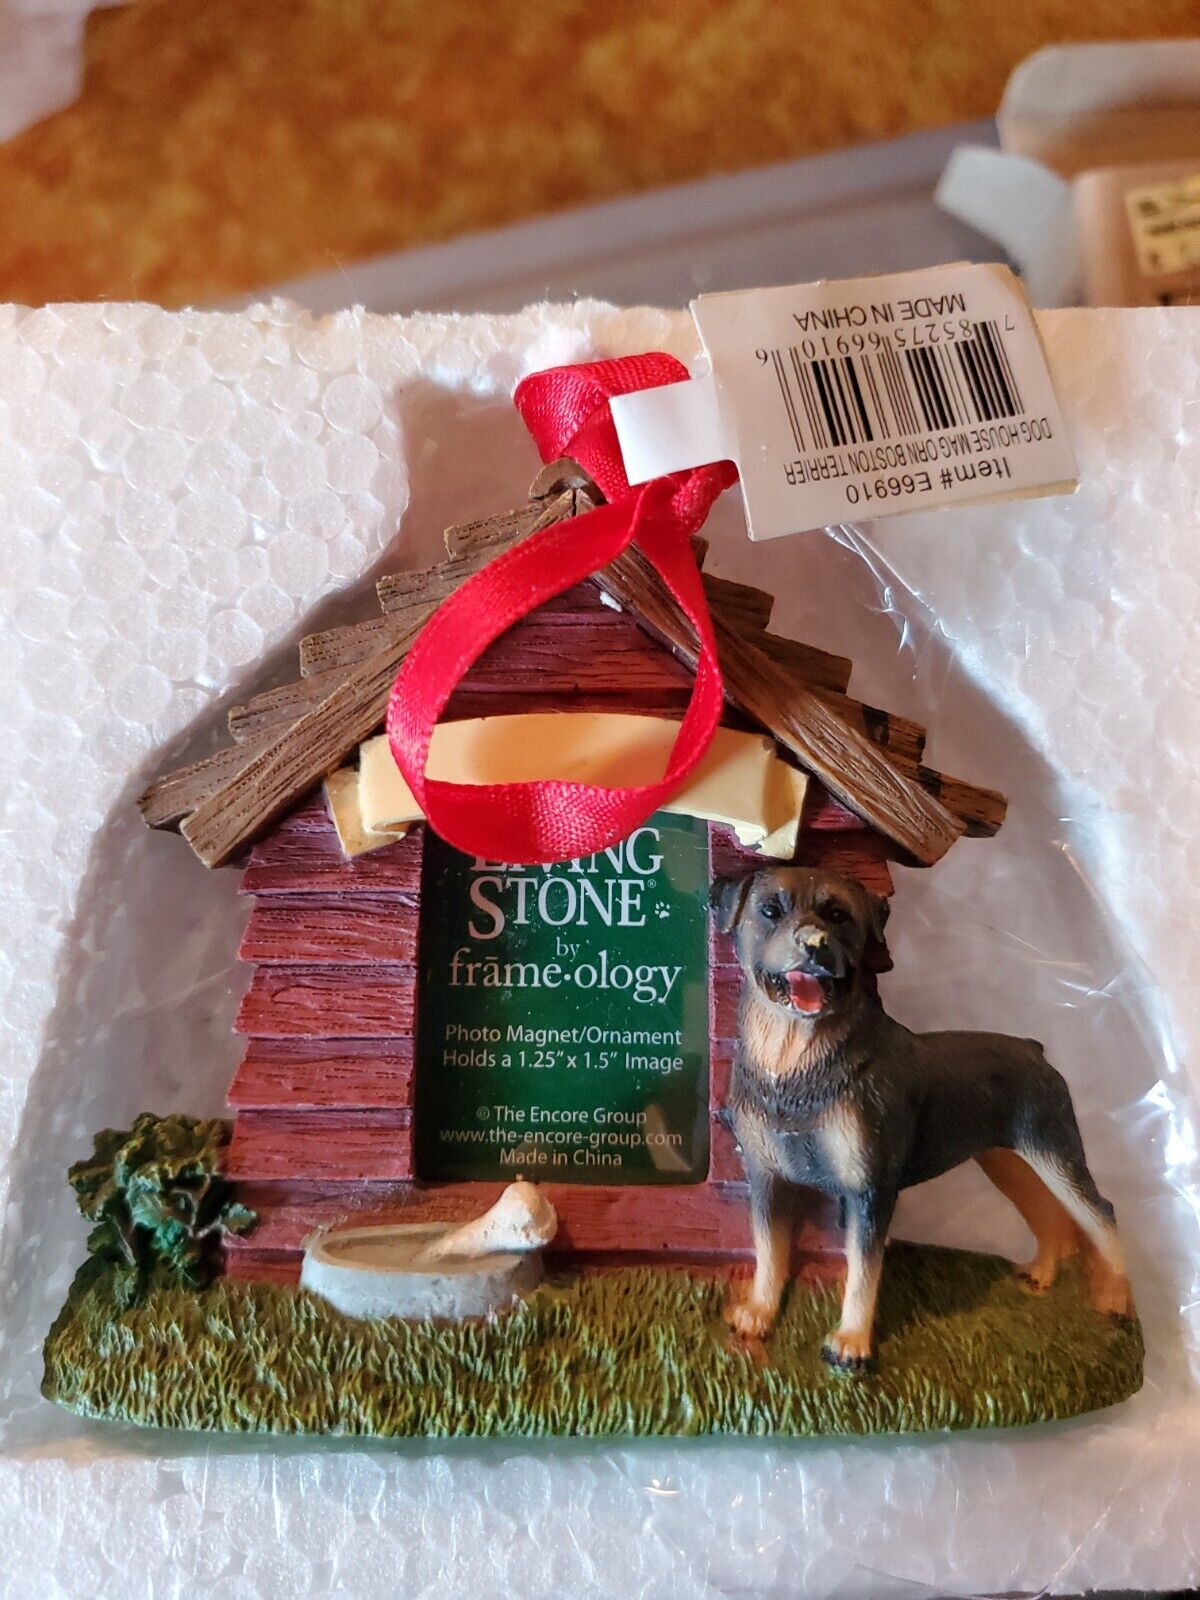 Encore Living Stone Frame-ology Photo Dog House Magnet Ornament Rottweiler